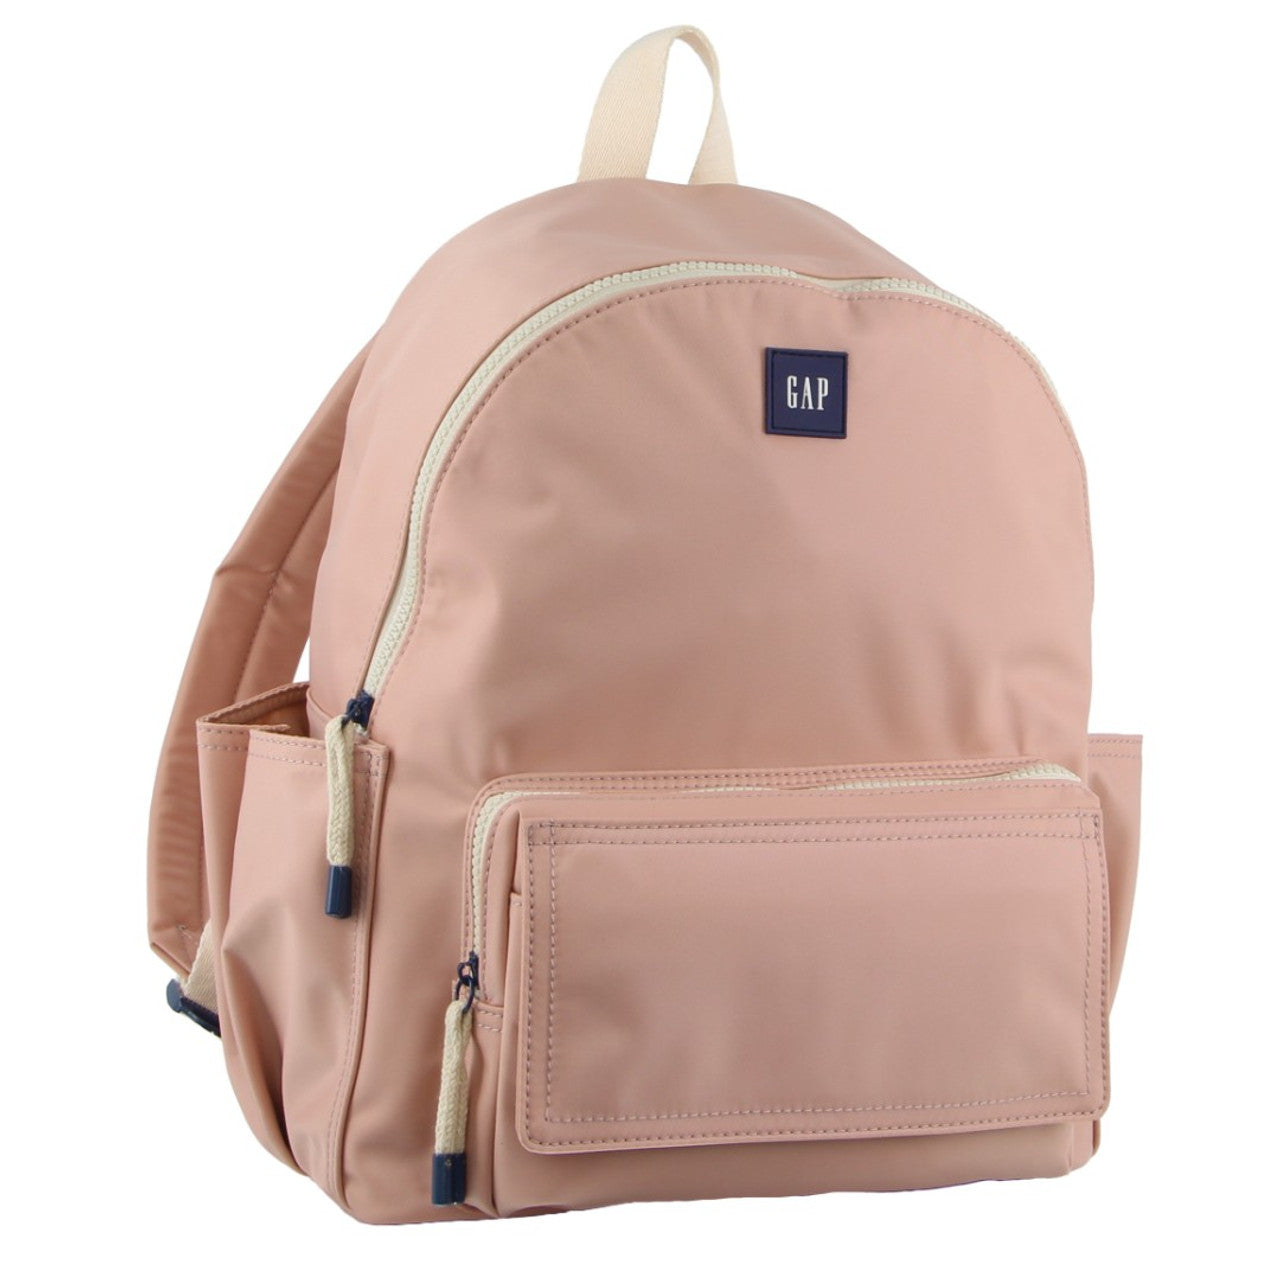 GAP - 11 Nylon Backpack front pocket - Blush-1